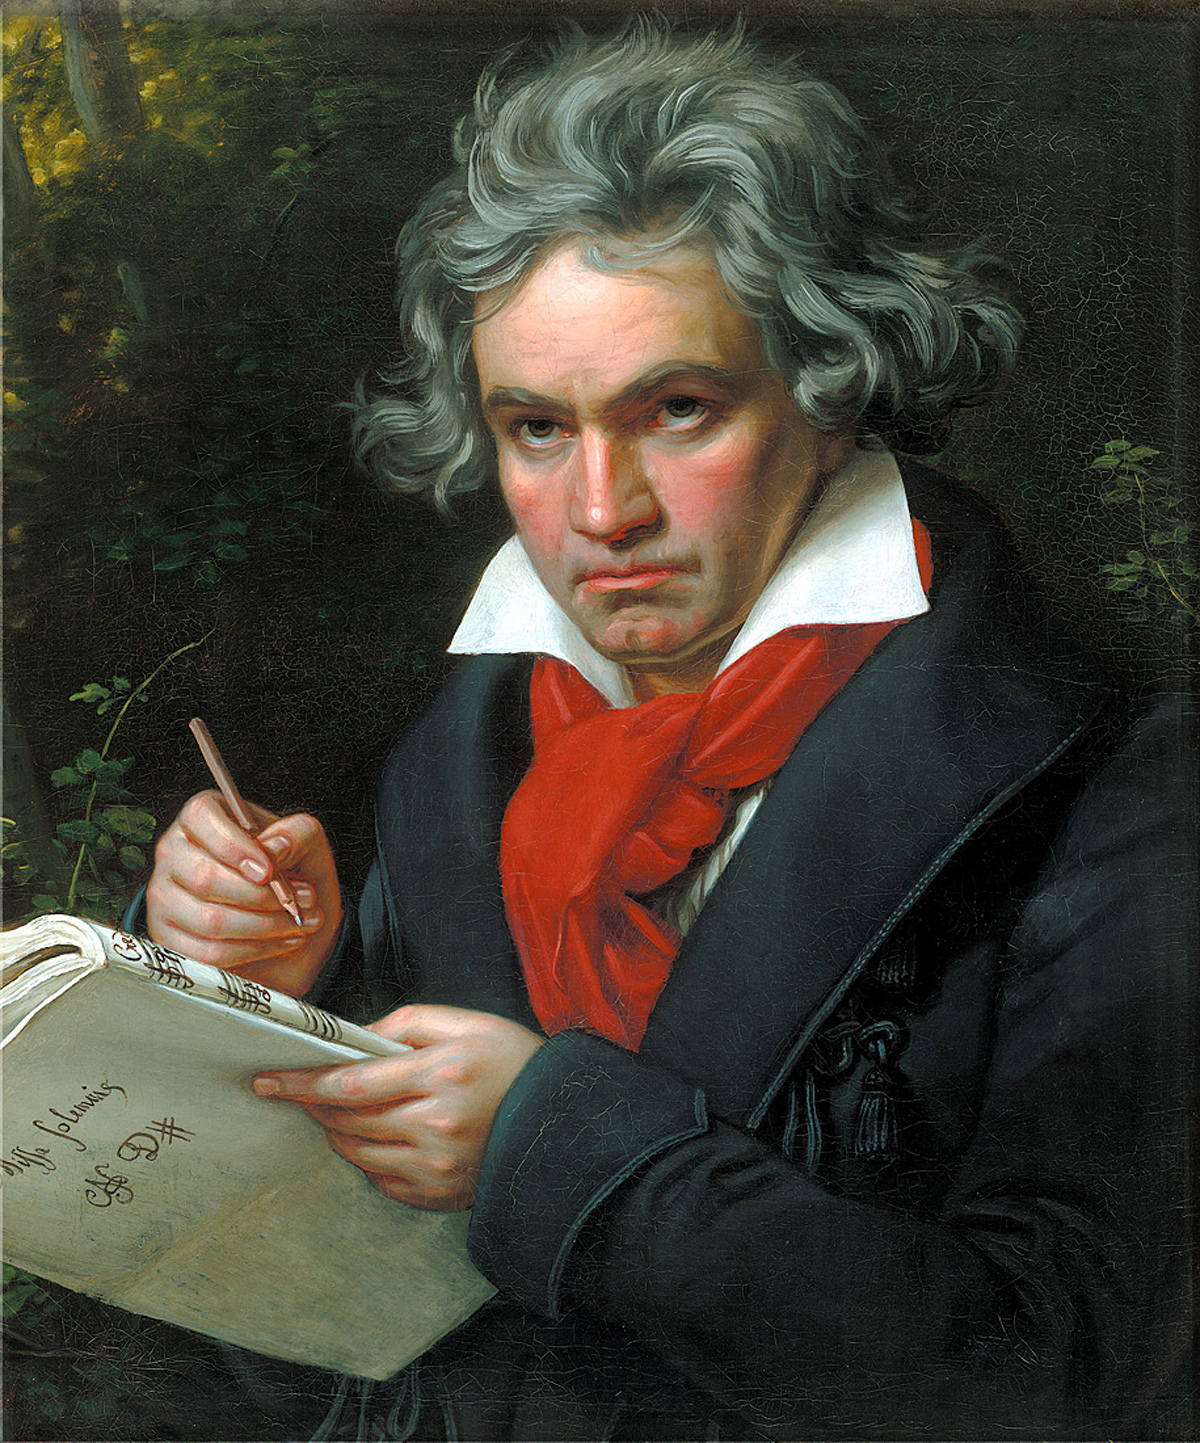 Beethoven and his moonlight sonata - An article in gujarati by Jignesh Adhyaru